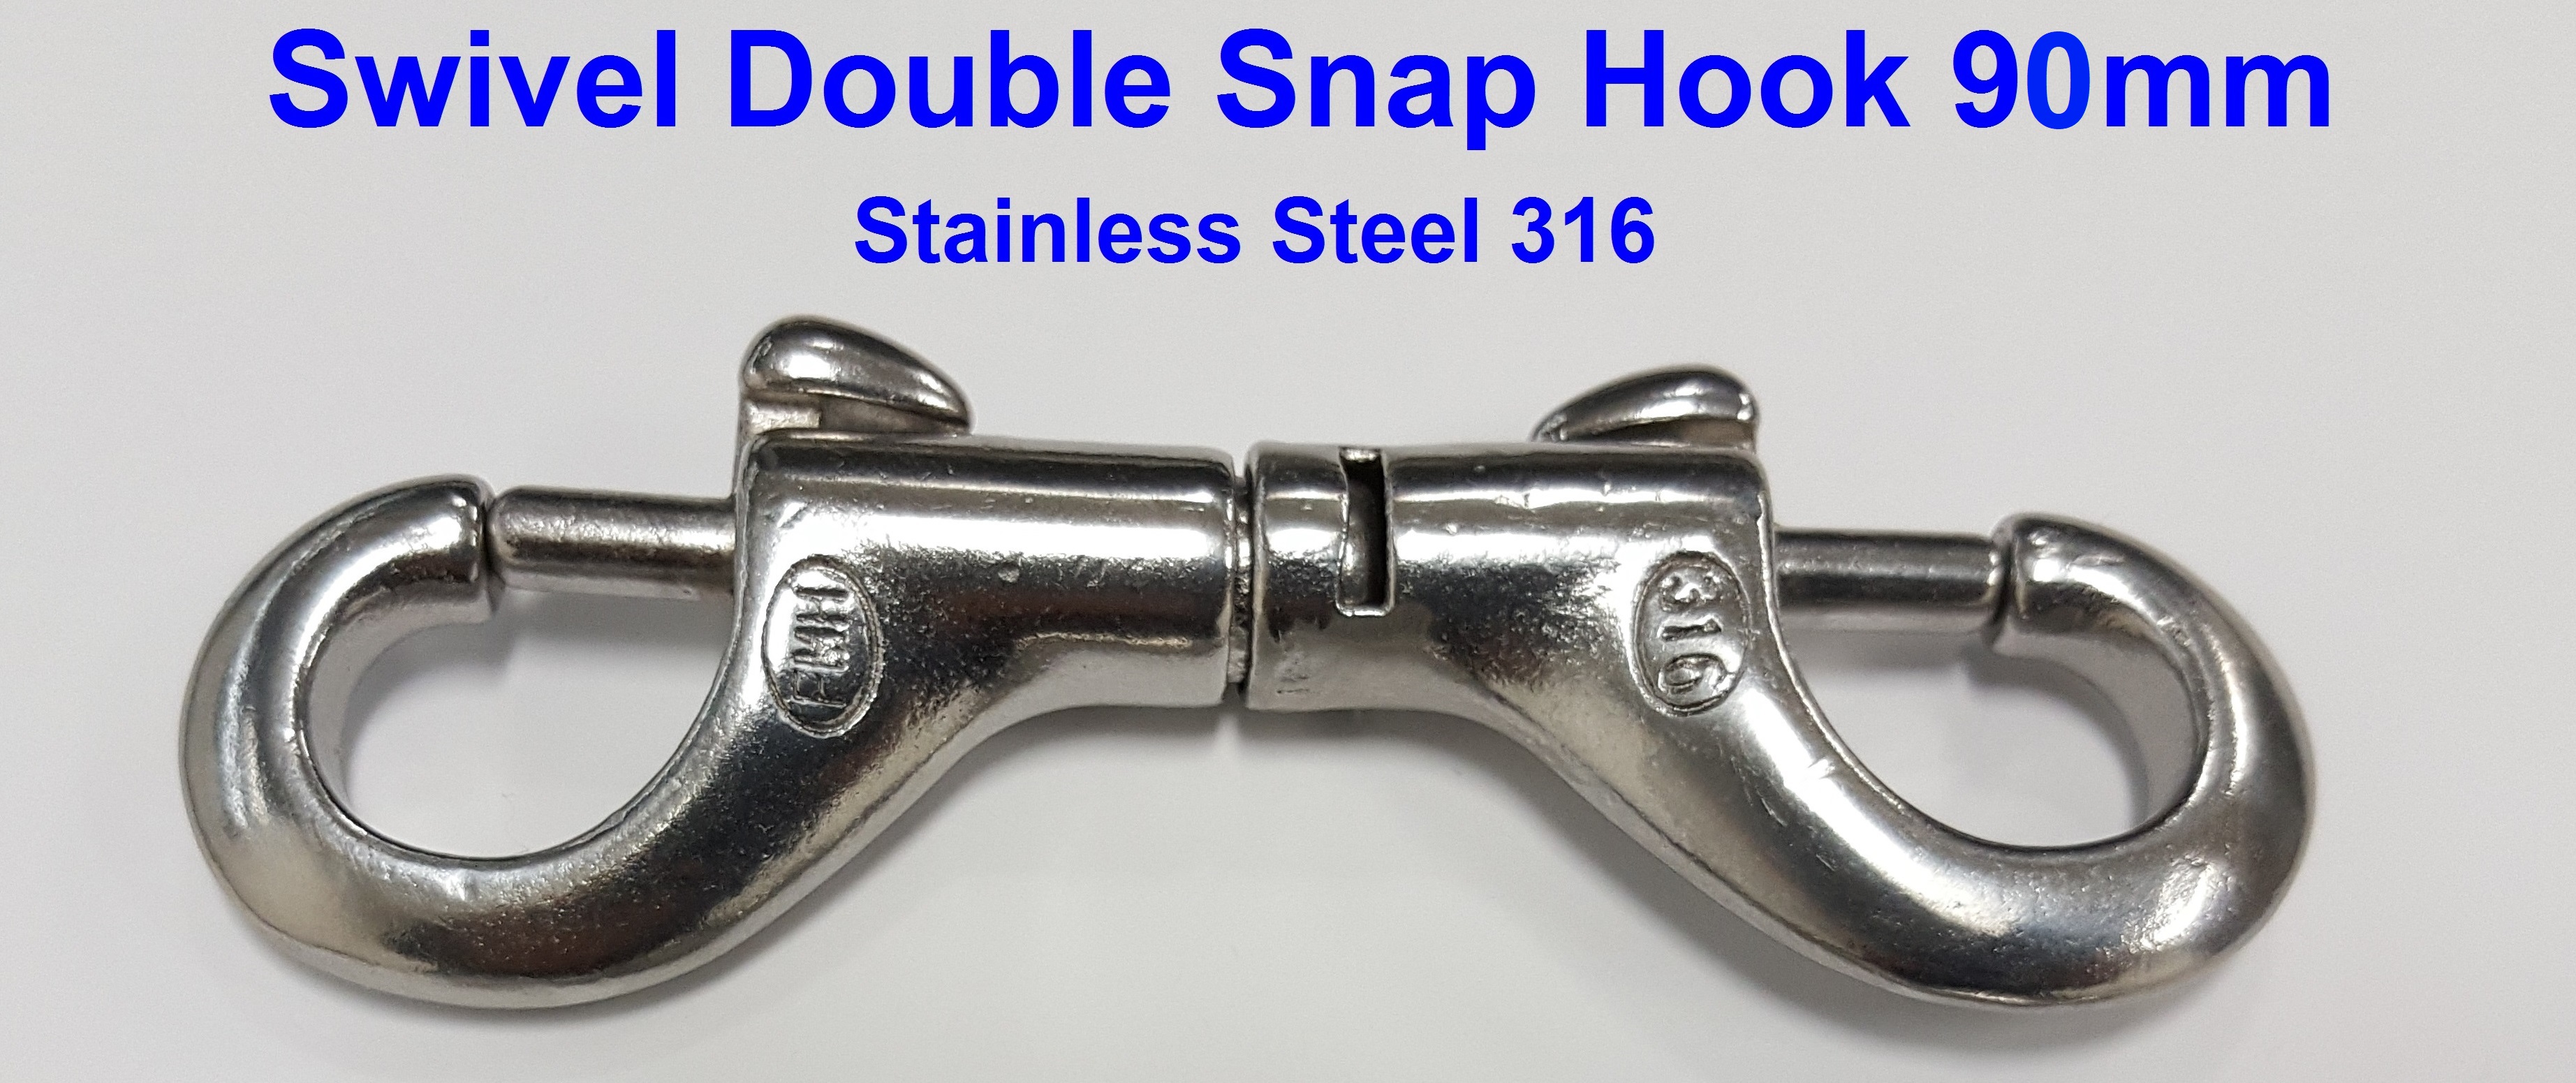 Swivel Double Snap Hooks 90mm_Hook_Hook & Shackle_Quality